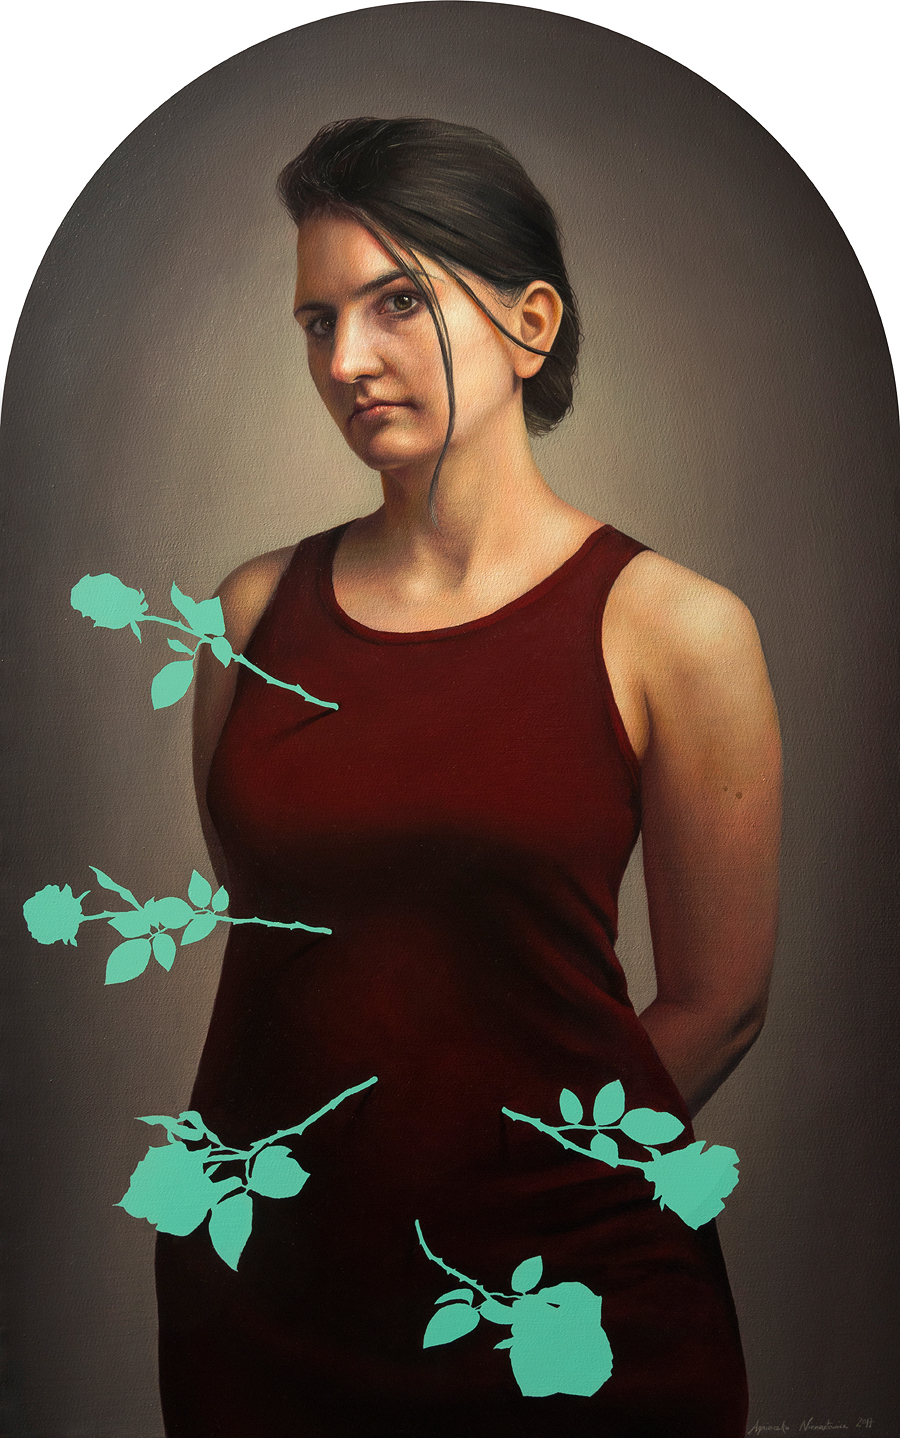 woman Roses rose portrait oil on canvas painting   Realism st sebastian